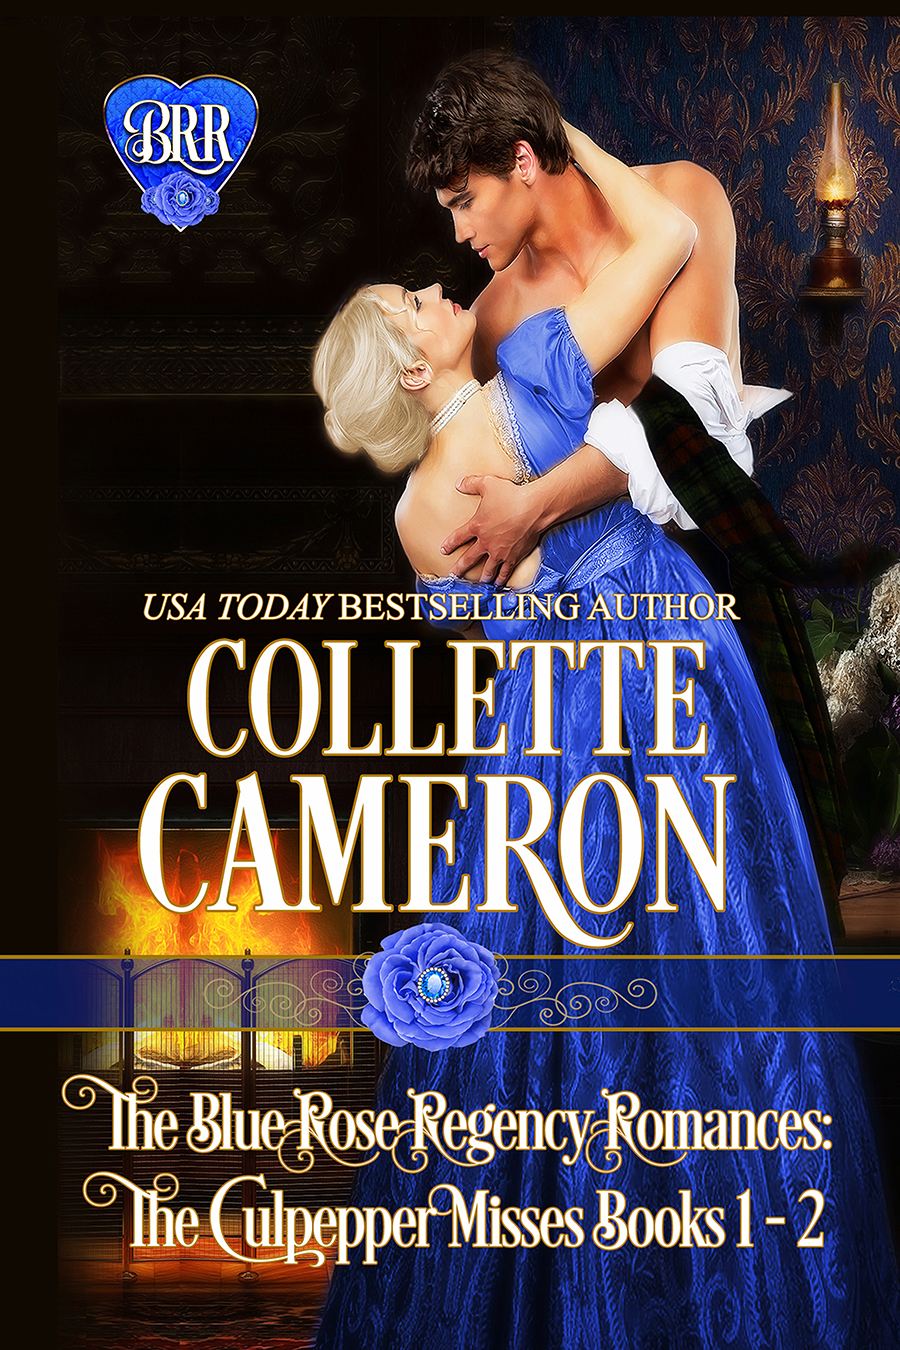 The Blue Rose Regency Romances: The Culpepper Misses Books 1-2 is 99¢!